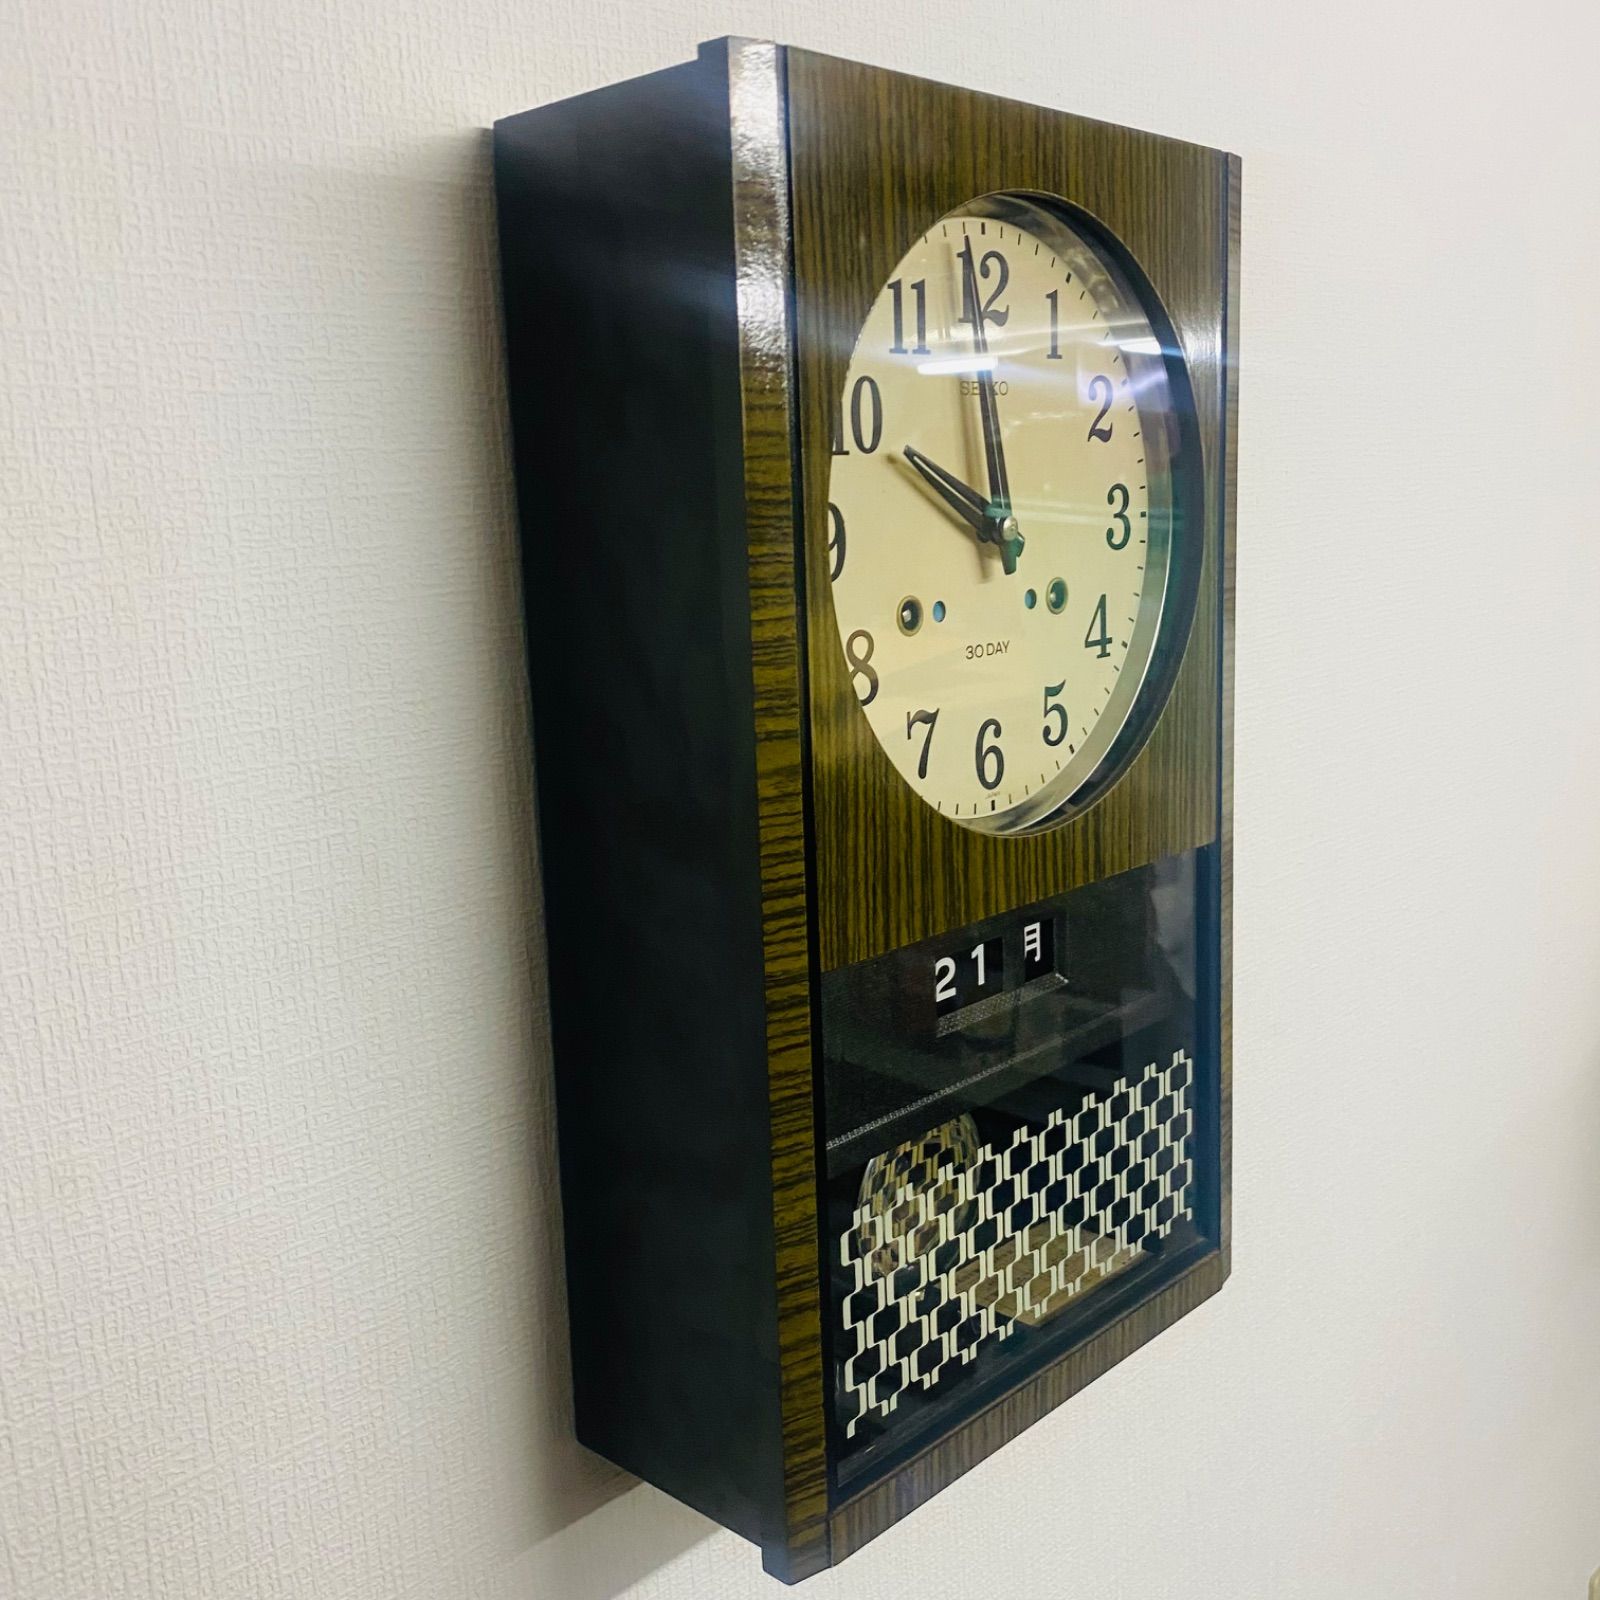 SEIKO 昭和レトロ 30日巻ゼンマイ時計 カレンダー付 4PC447 - メルカリ